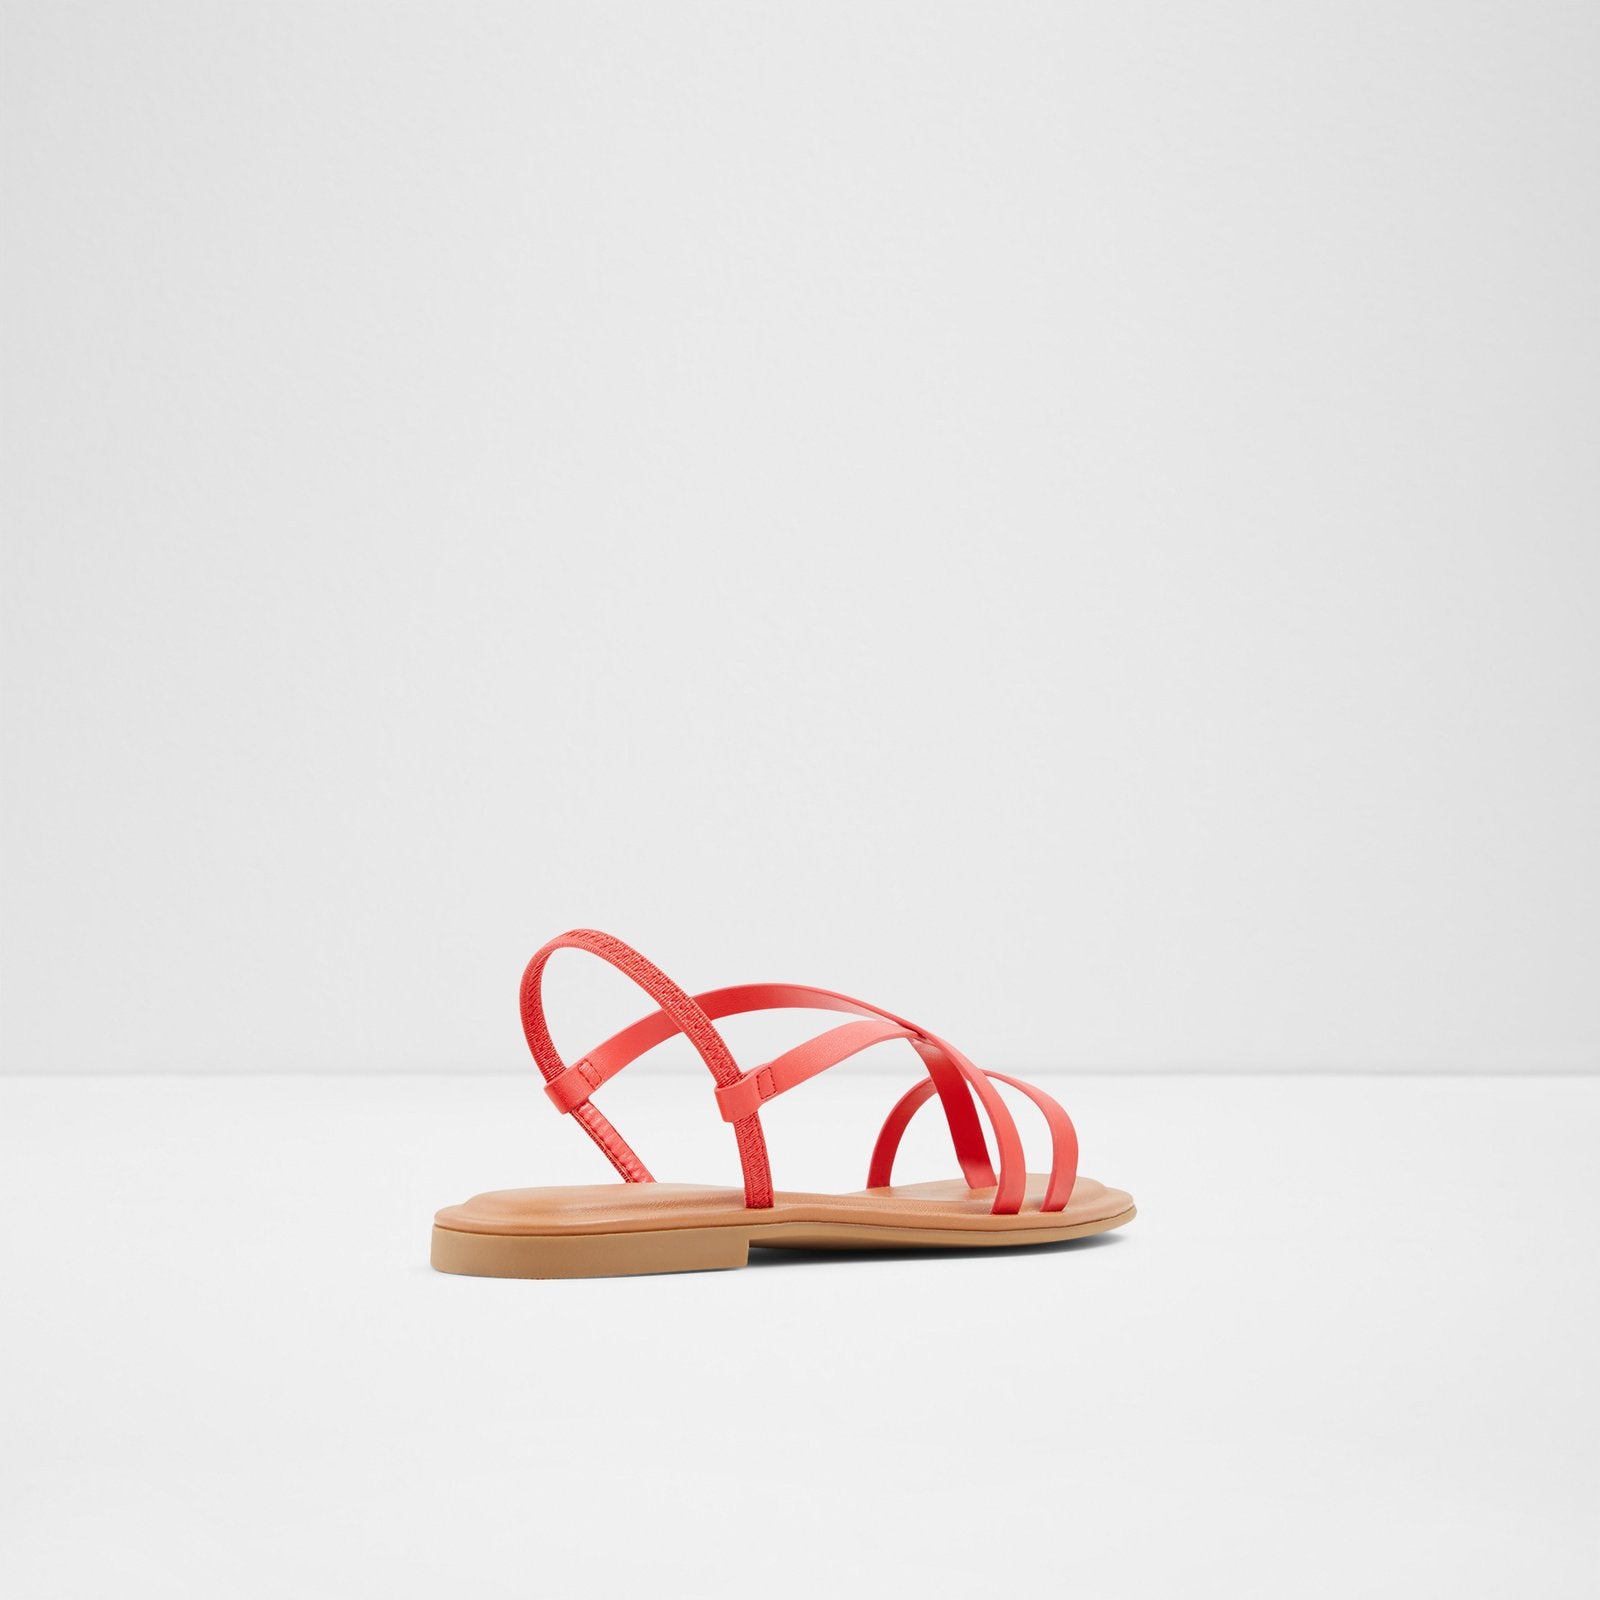 Broasa Women Shoes - Red - ALDO KSA